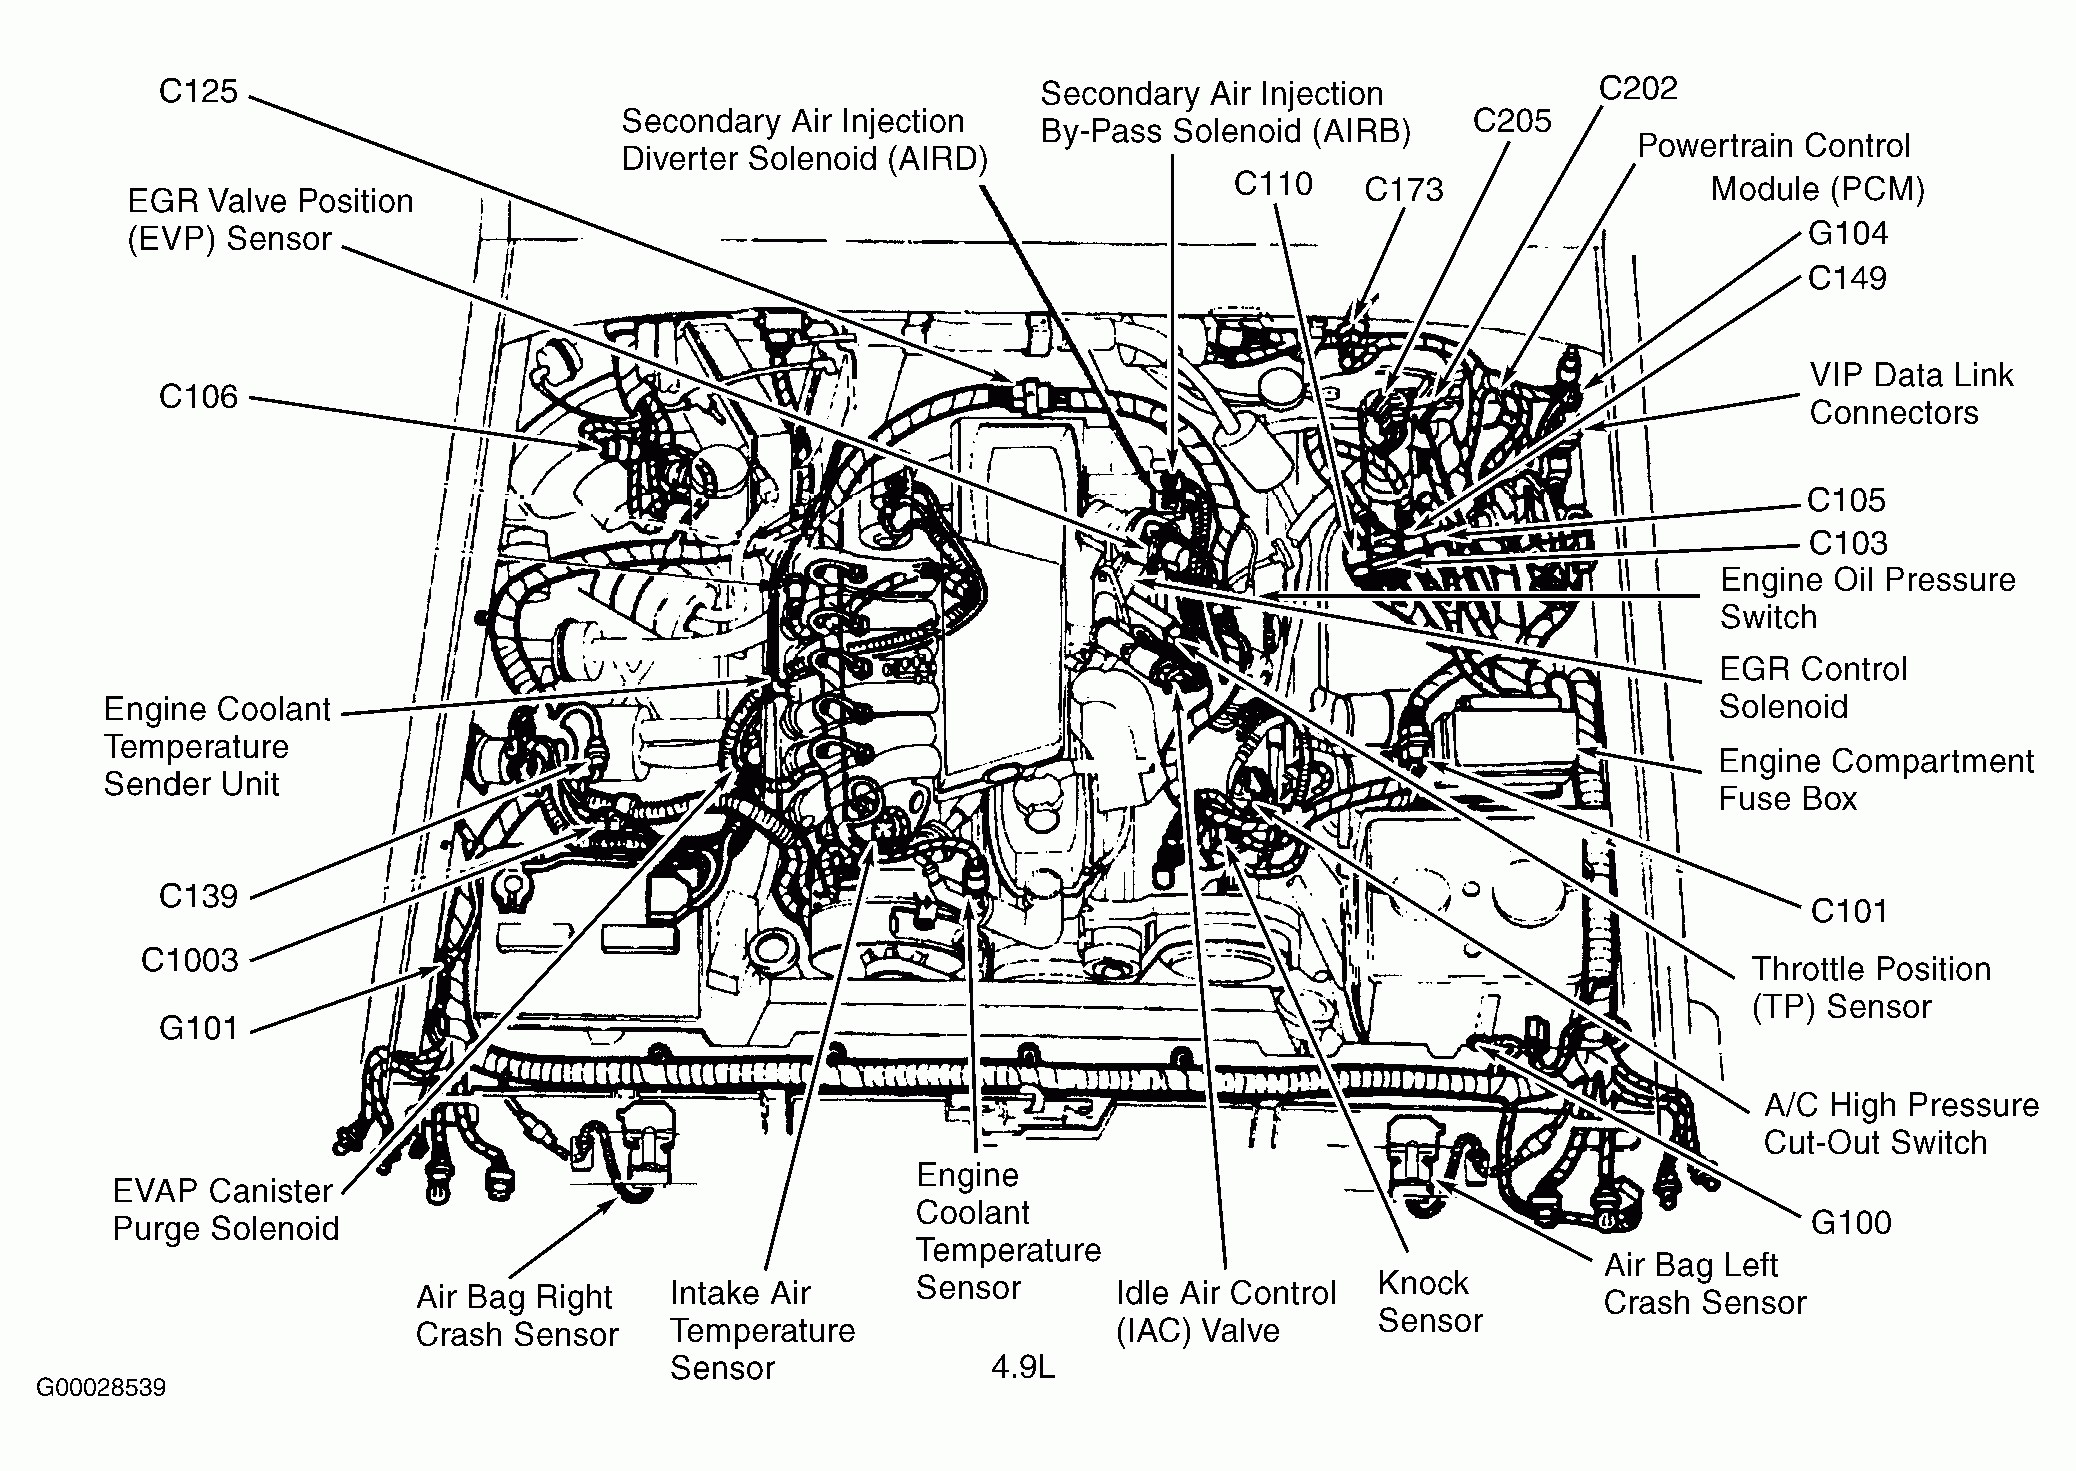 2005 ford 5.4 Engine Wiring Harness Diagram Firing order 2005 ford F150 5 4 Of 2005 ford 5.4 Engine Wiring Harness Diagram